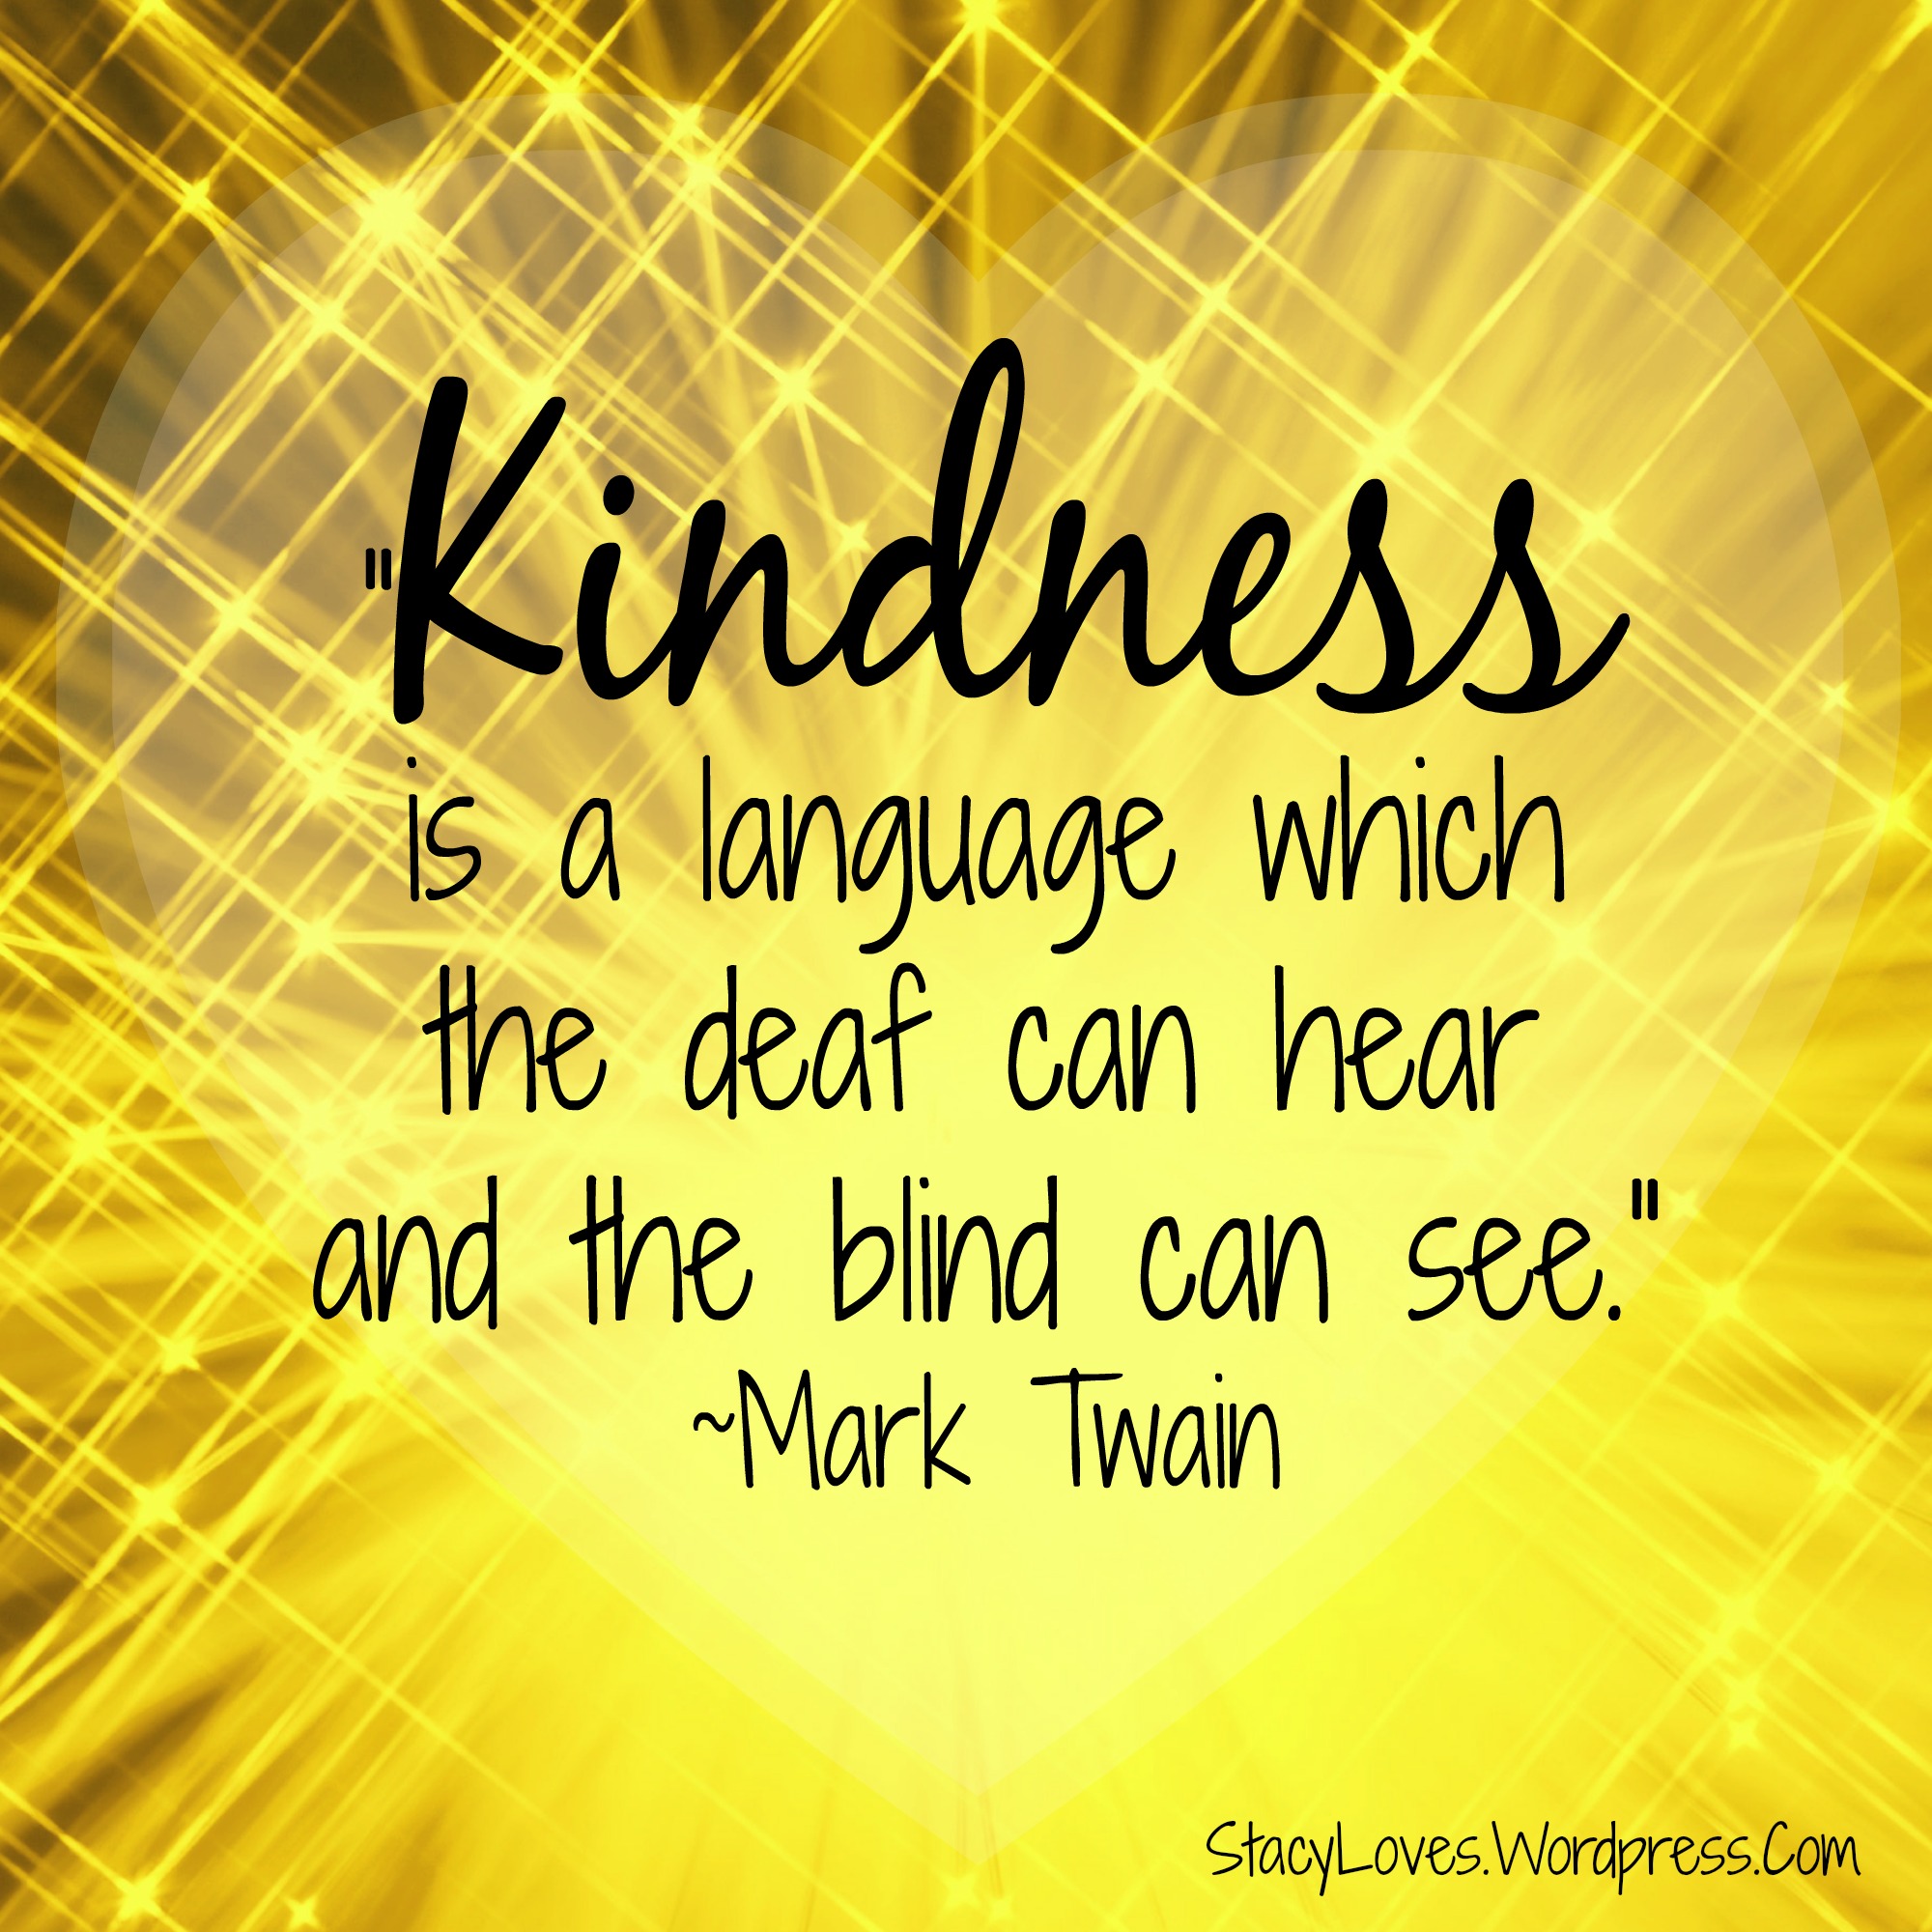 kindness-mark-twain2.jpg